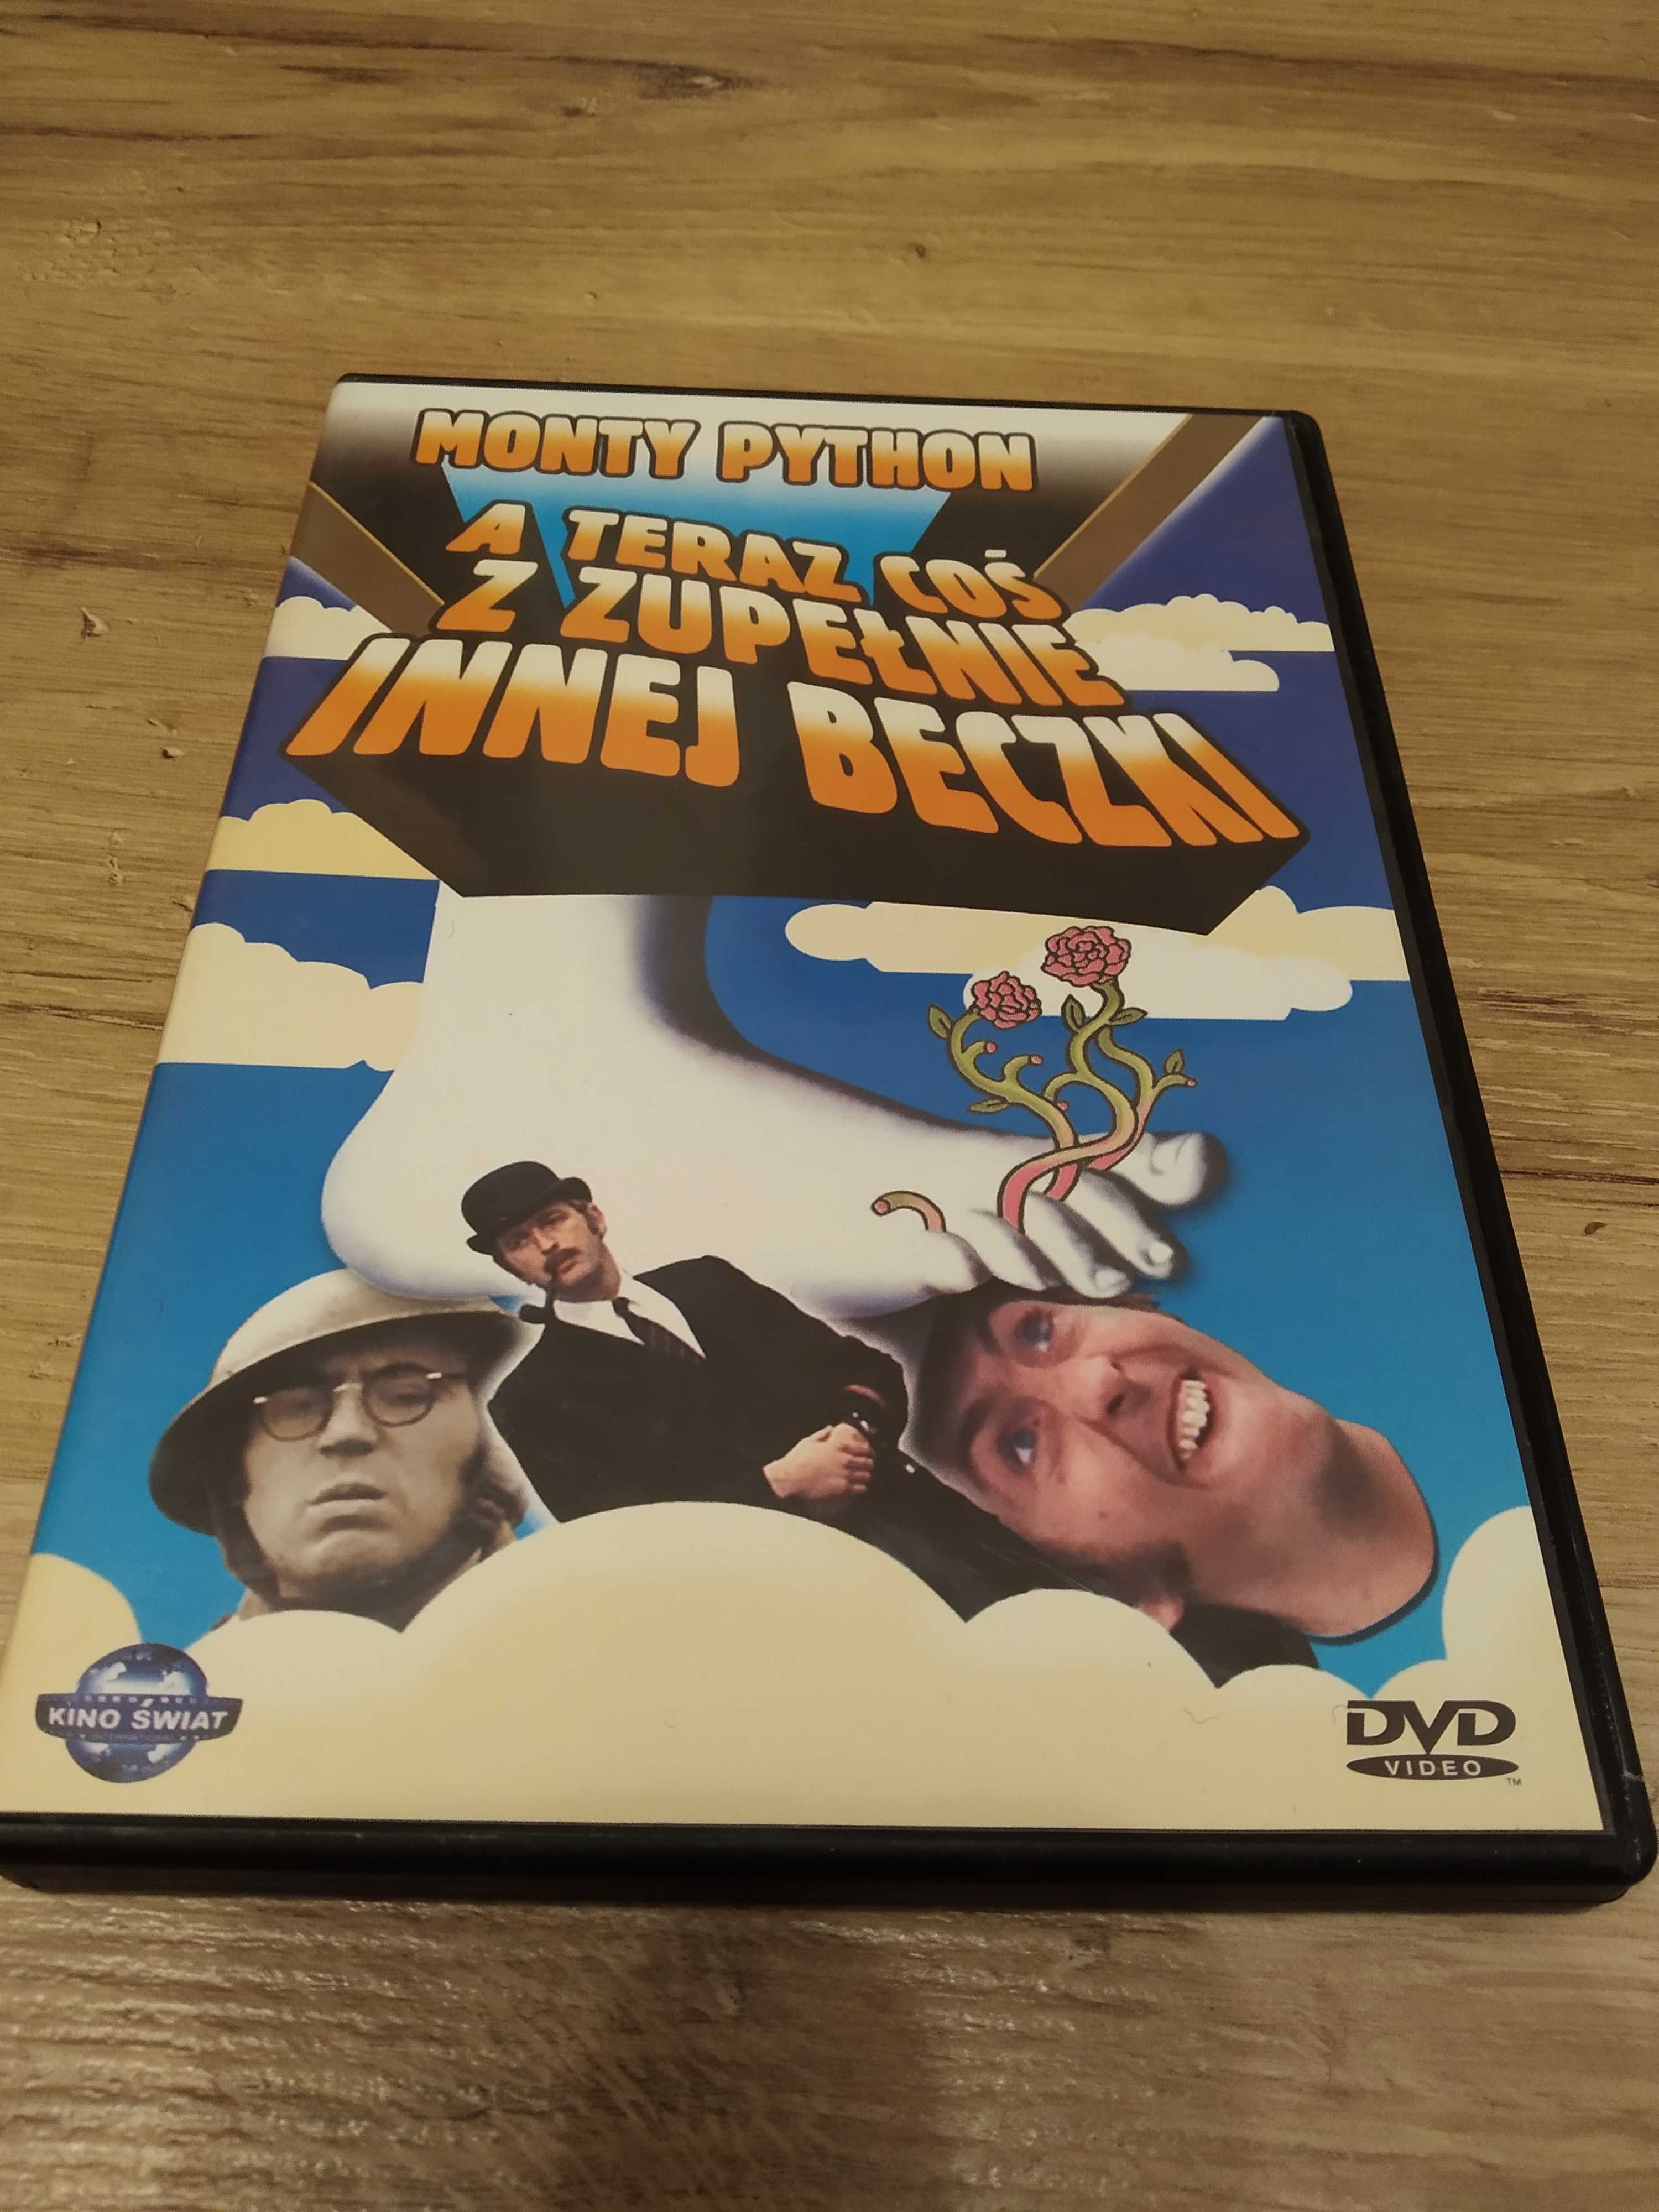 DVD Monty Python A teraz cos z zupelnie innej beczki